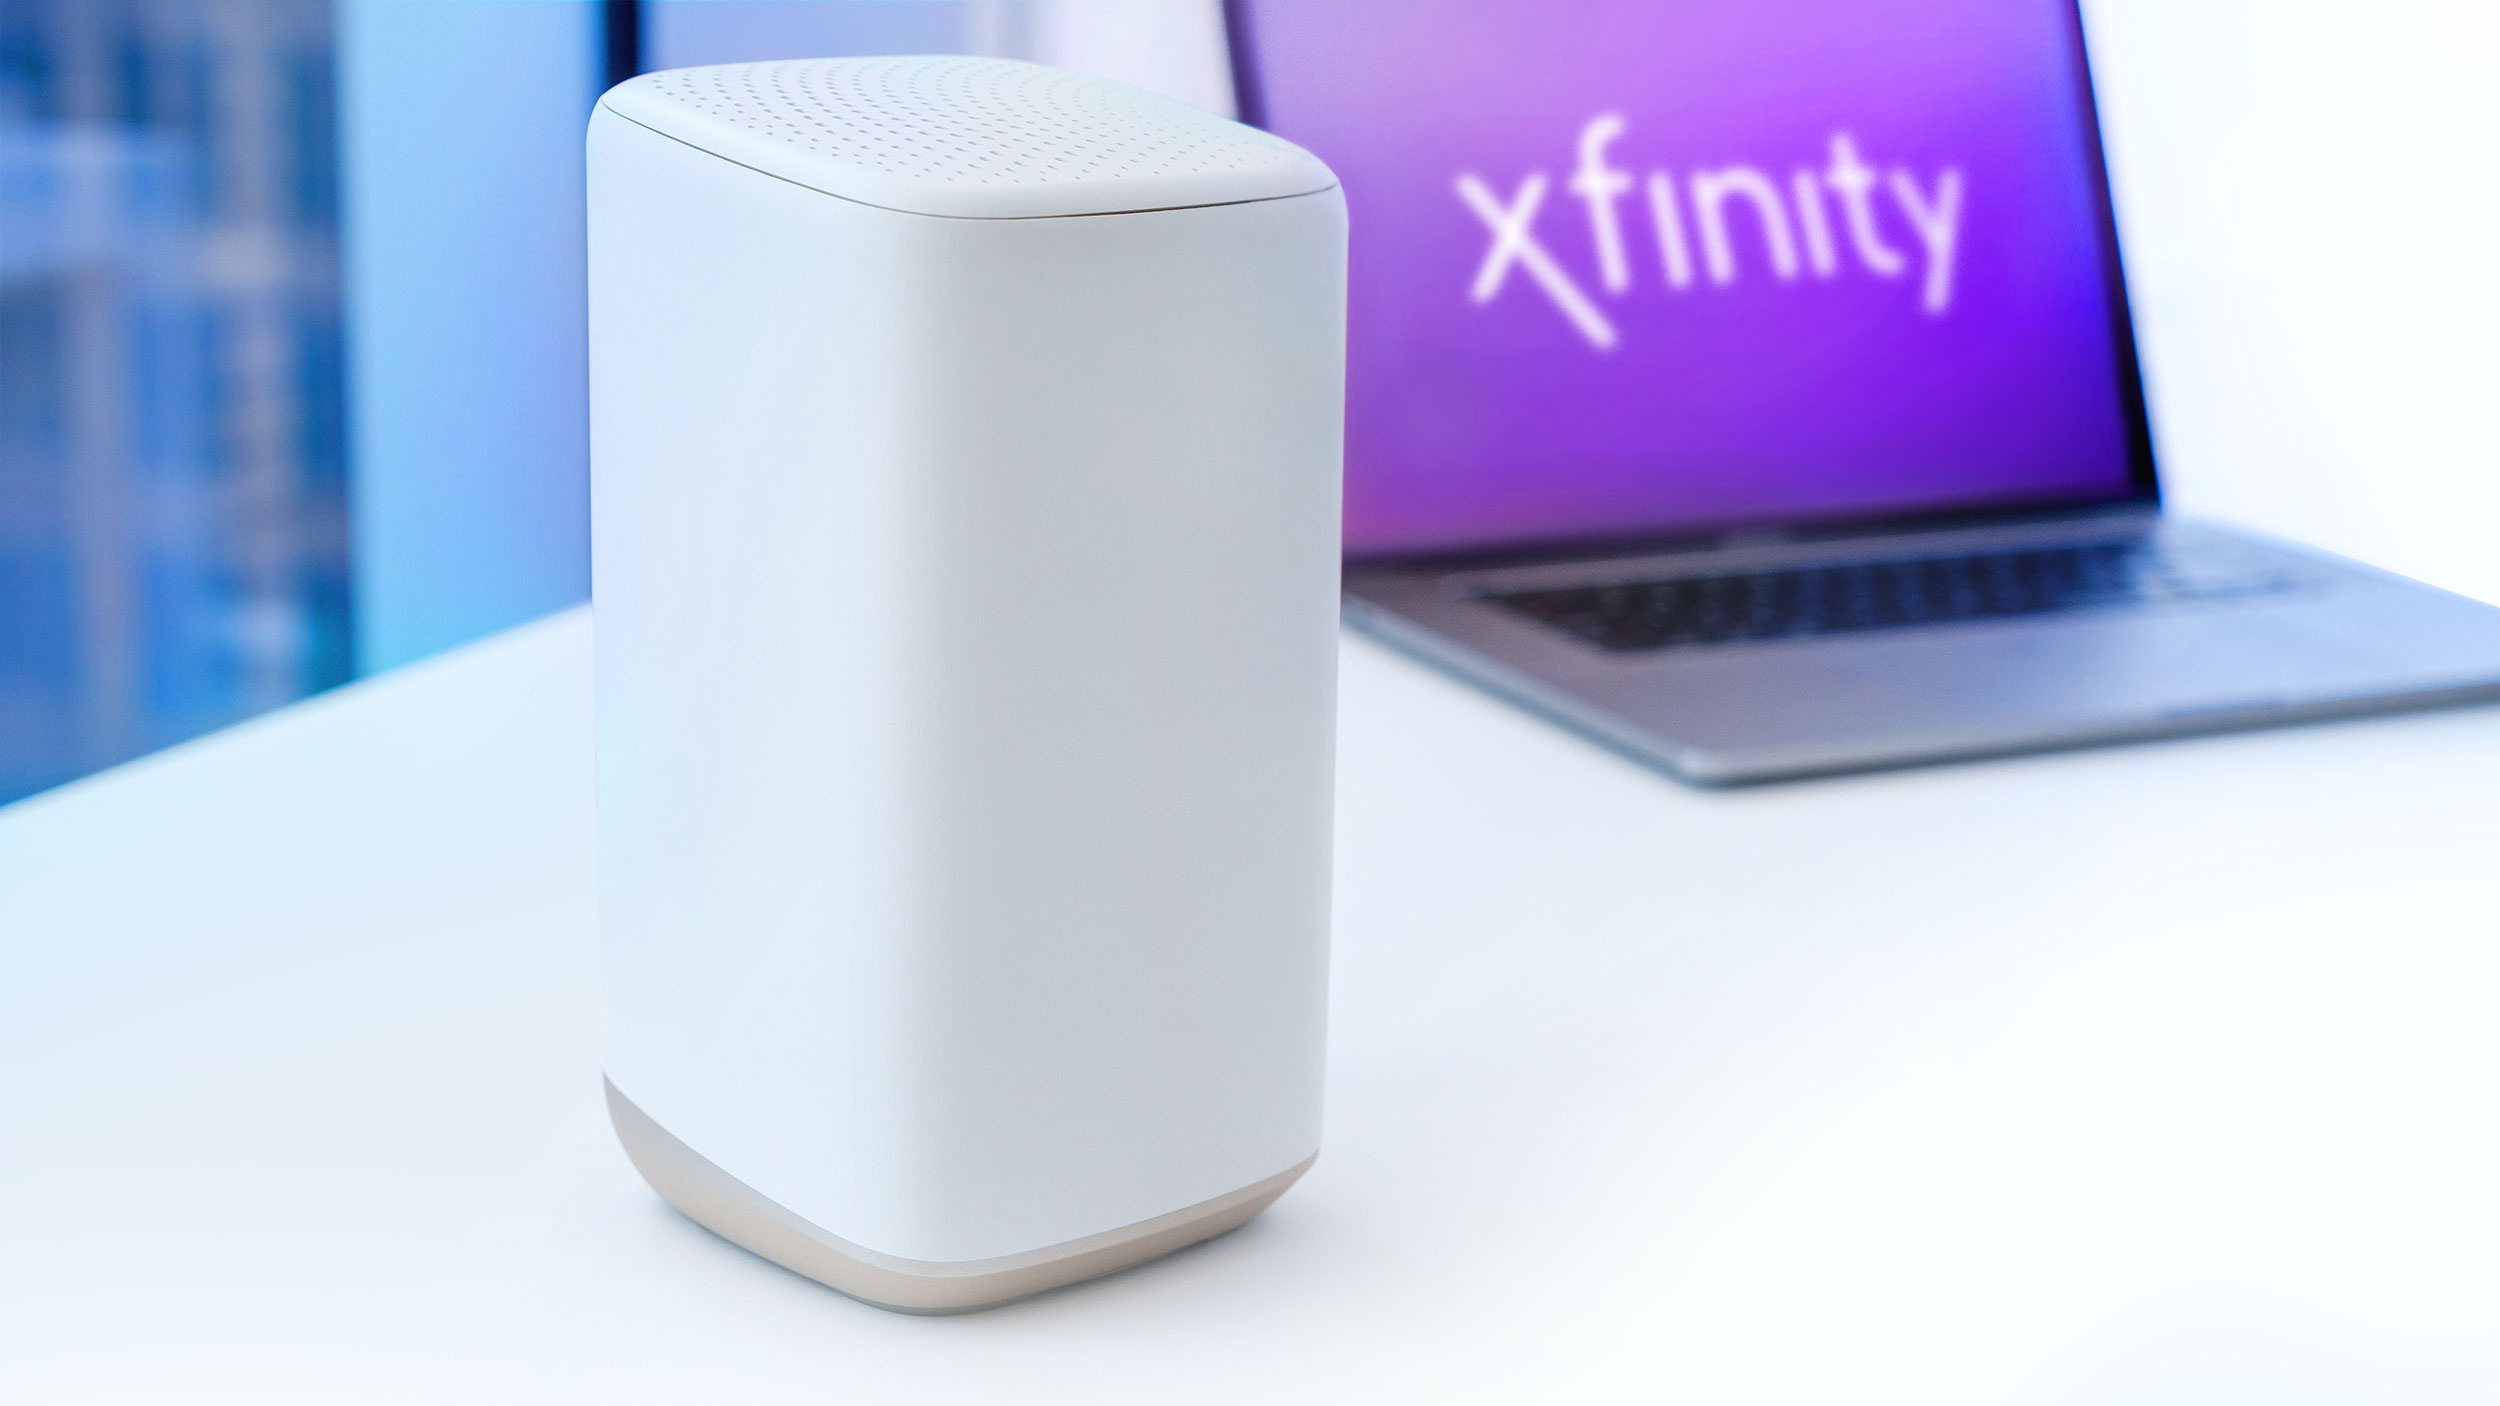 Disabling Xfinity Wi-Fi Hotspot: Quick Guide